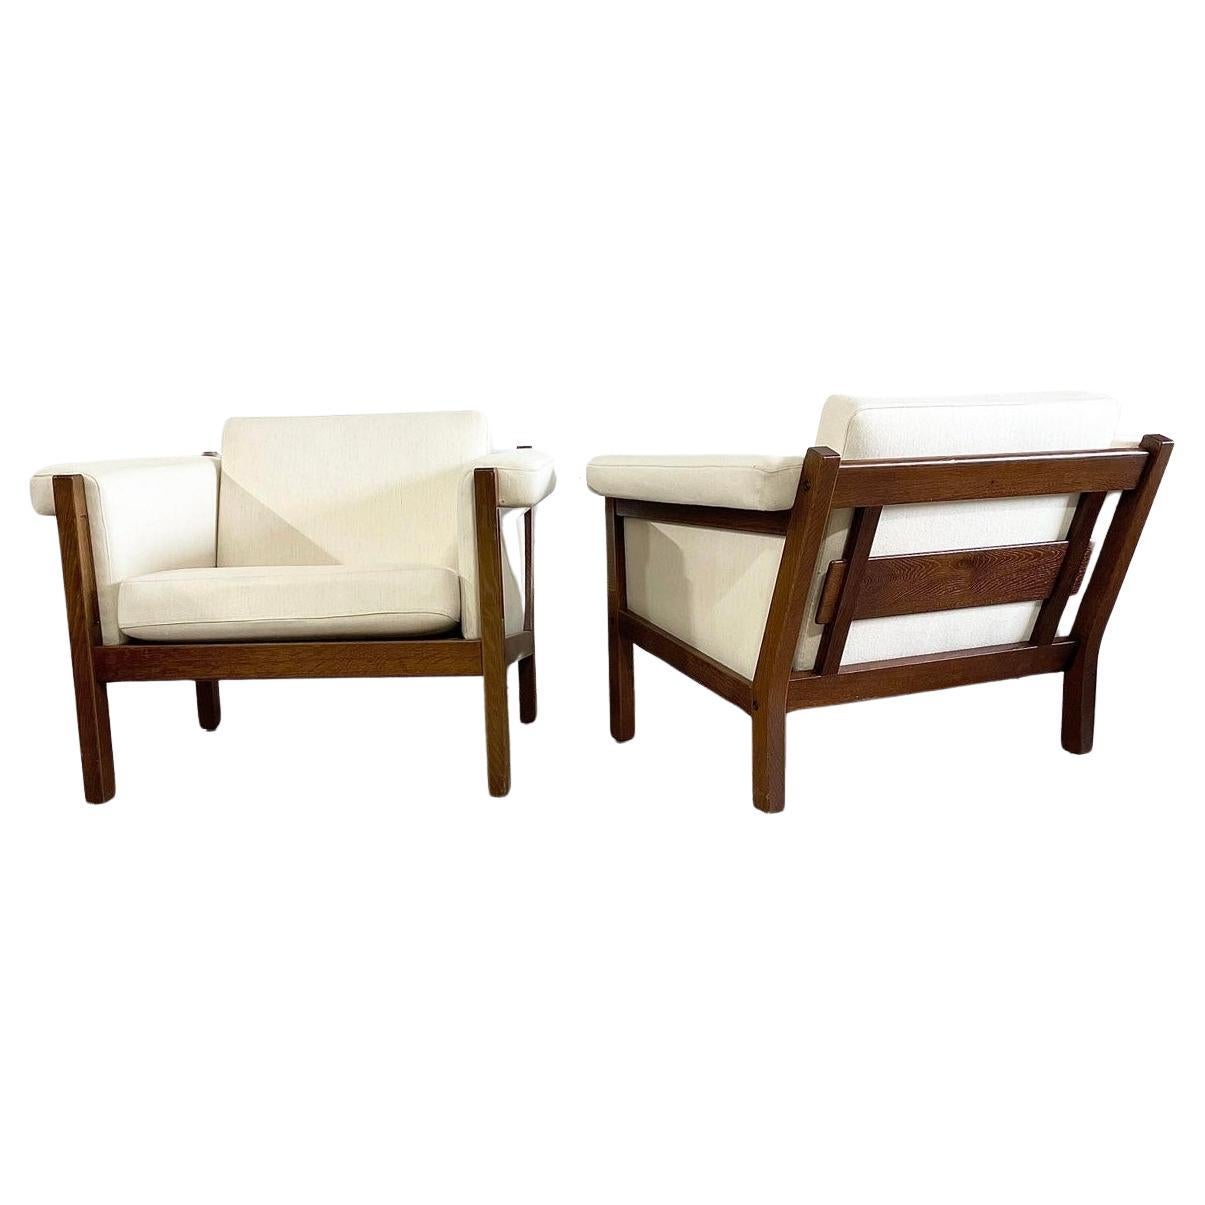 Hans Wegner Ge40 Getama Danish Modern of Lounge Chairs - a Pair For Sale